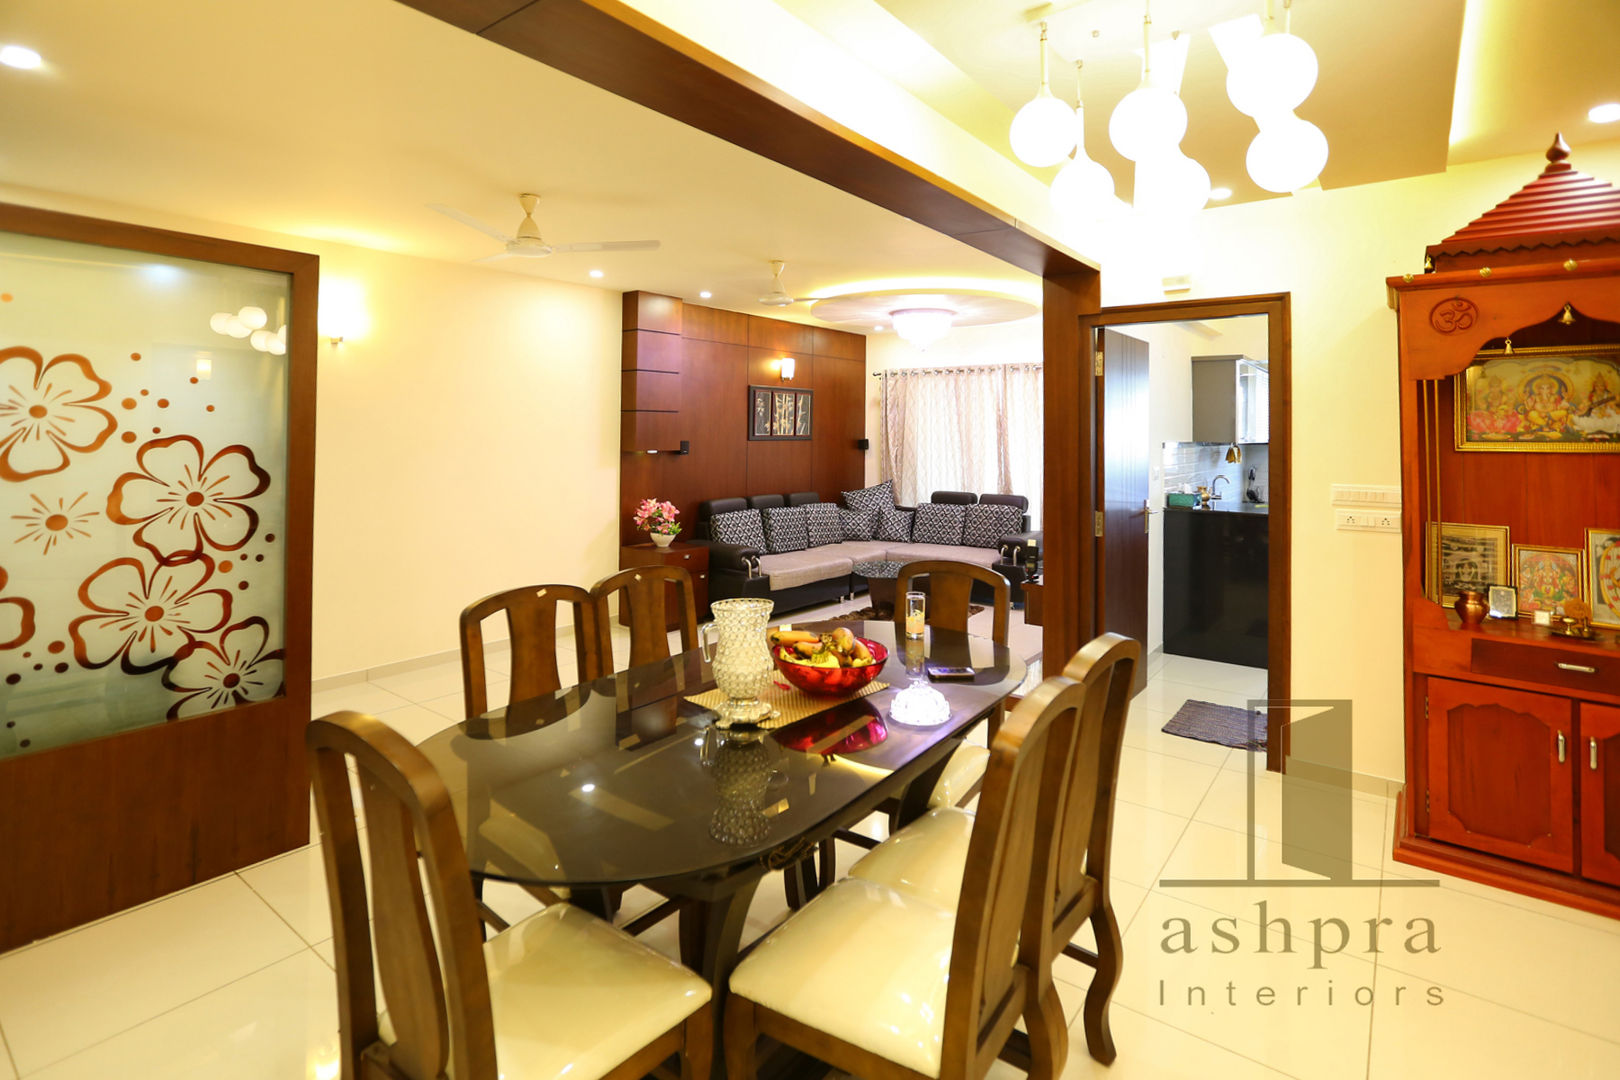 Interior work for a 2 bedroom apartment @ Mangalore.., Ashpra interiors Ashpra interiors Salas de jantar asiáticas Mesas